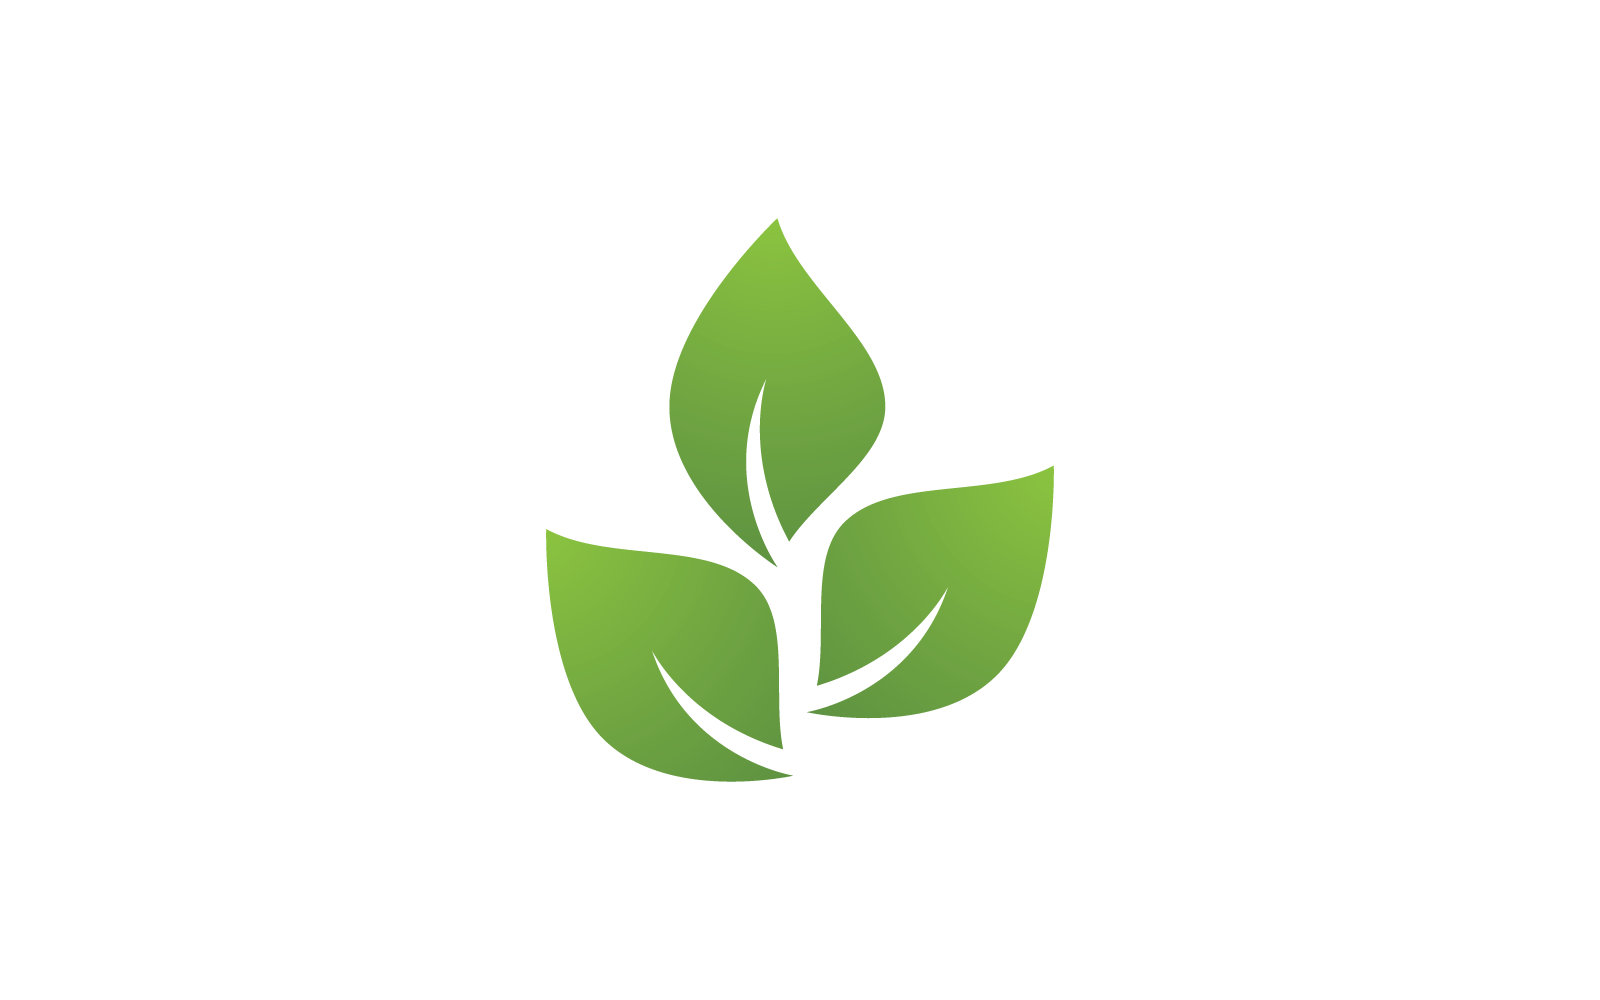 Eco green leaf illustration logo nature template